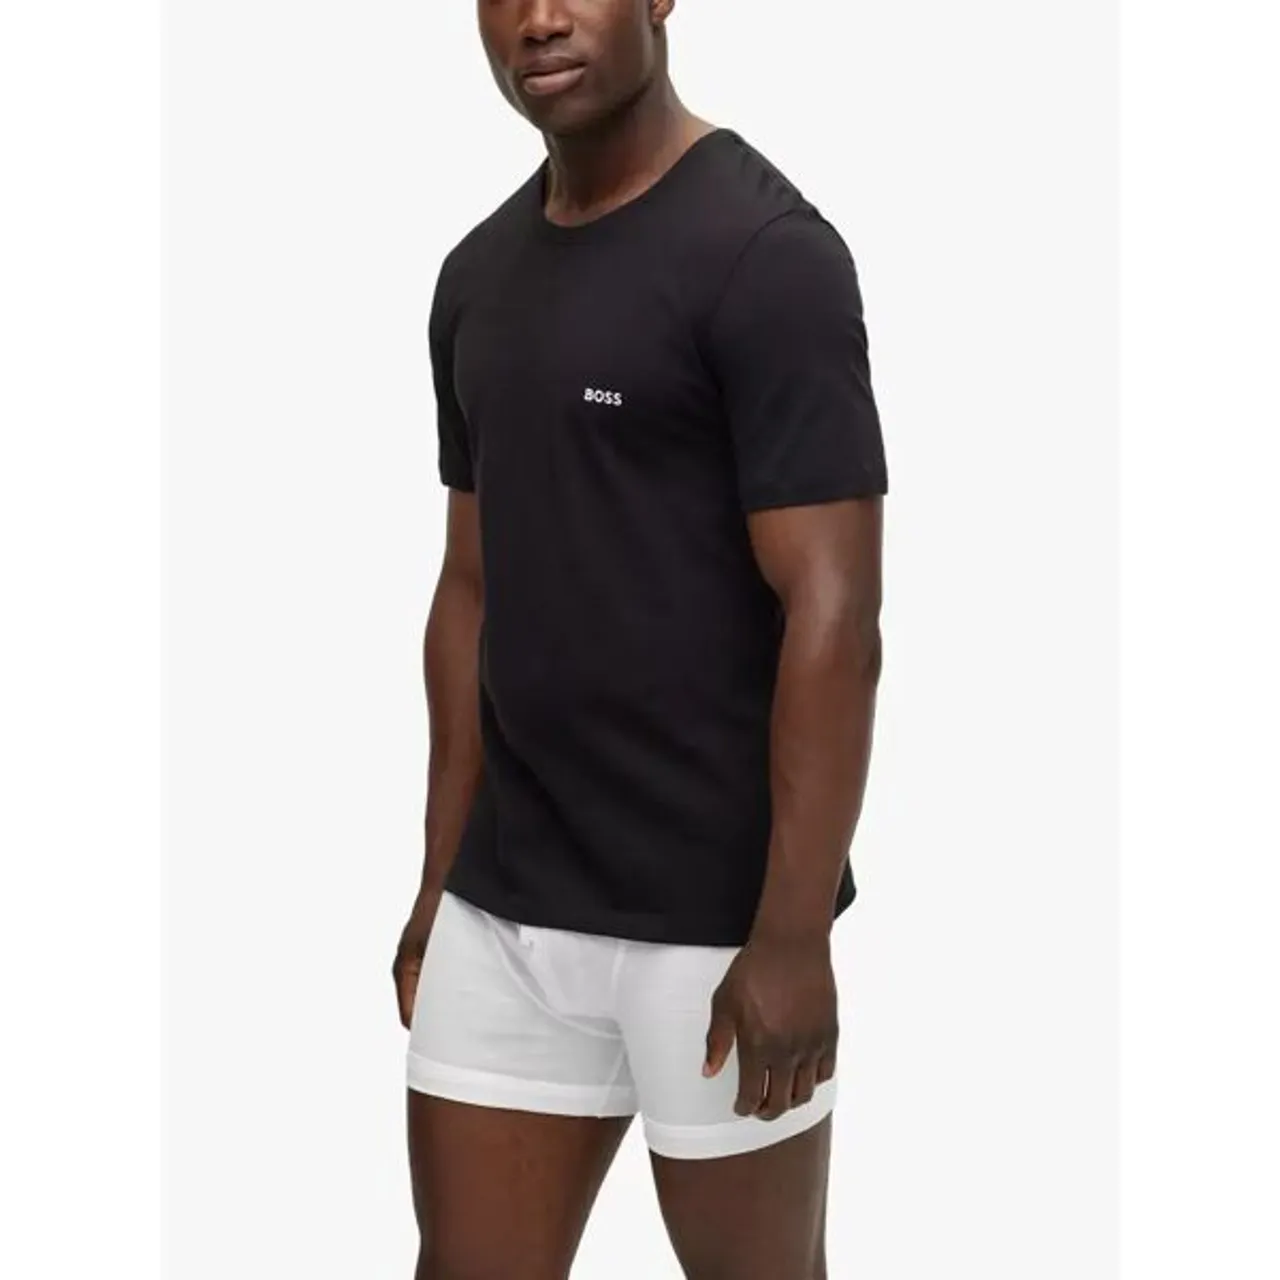 Hugo Boss BOSS Cotton Crew Neck Lounge T-Shirts, Pack of 3 - White/Navy/Black - Male